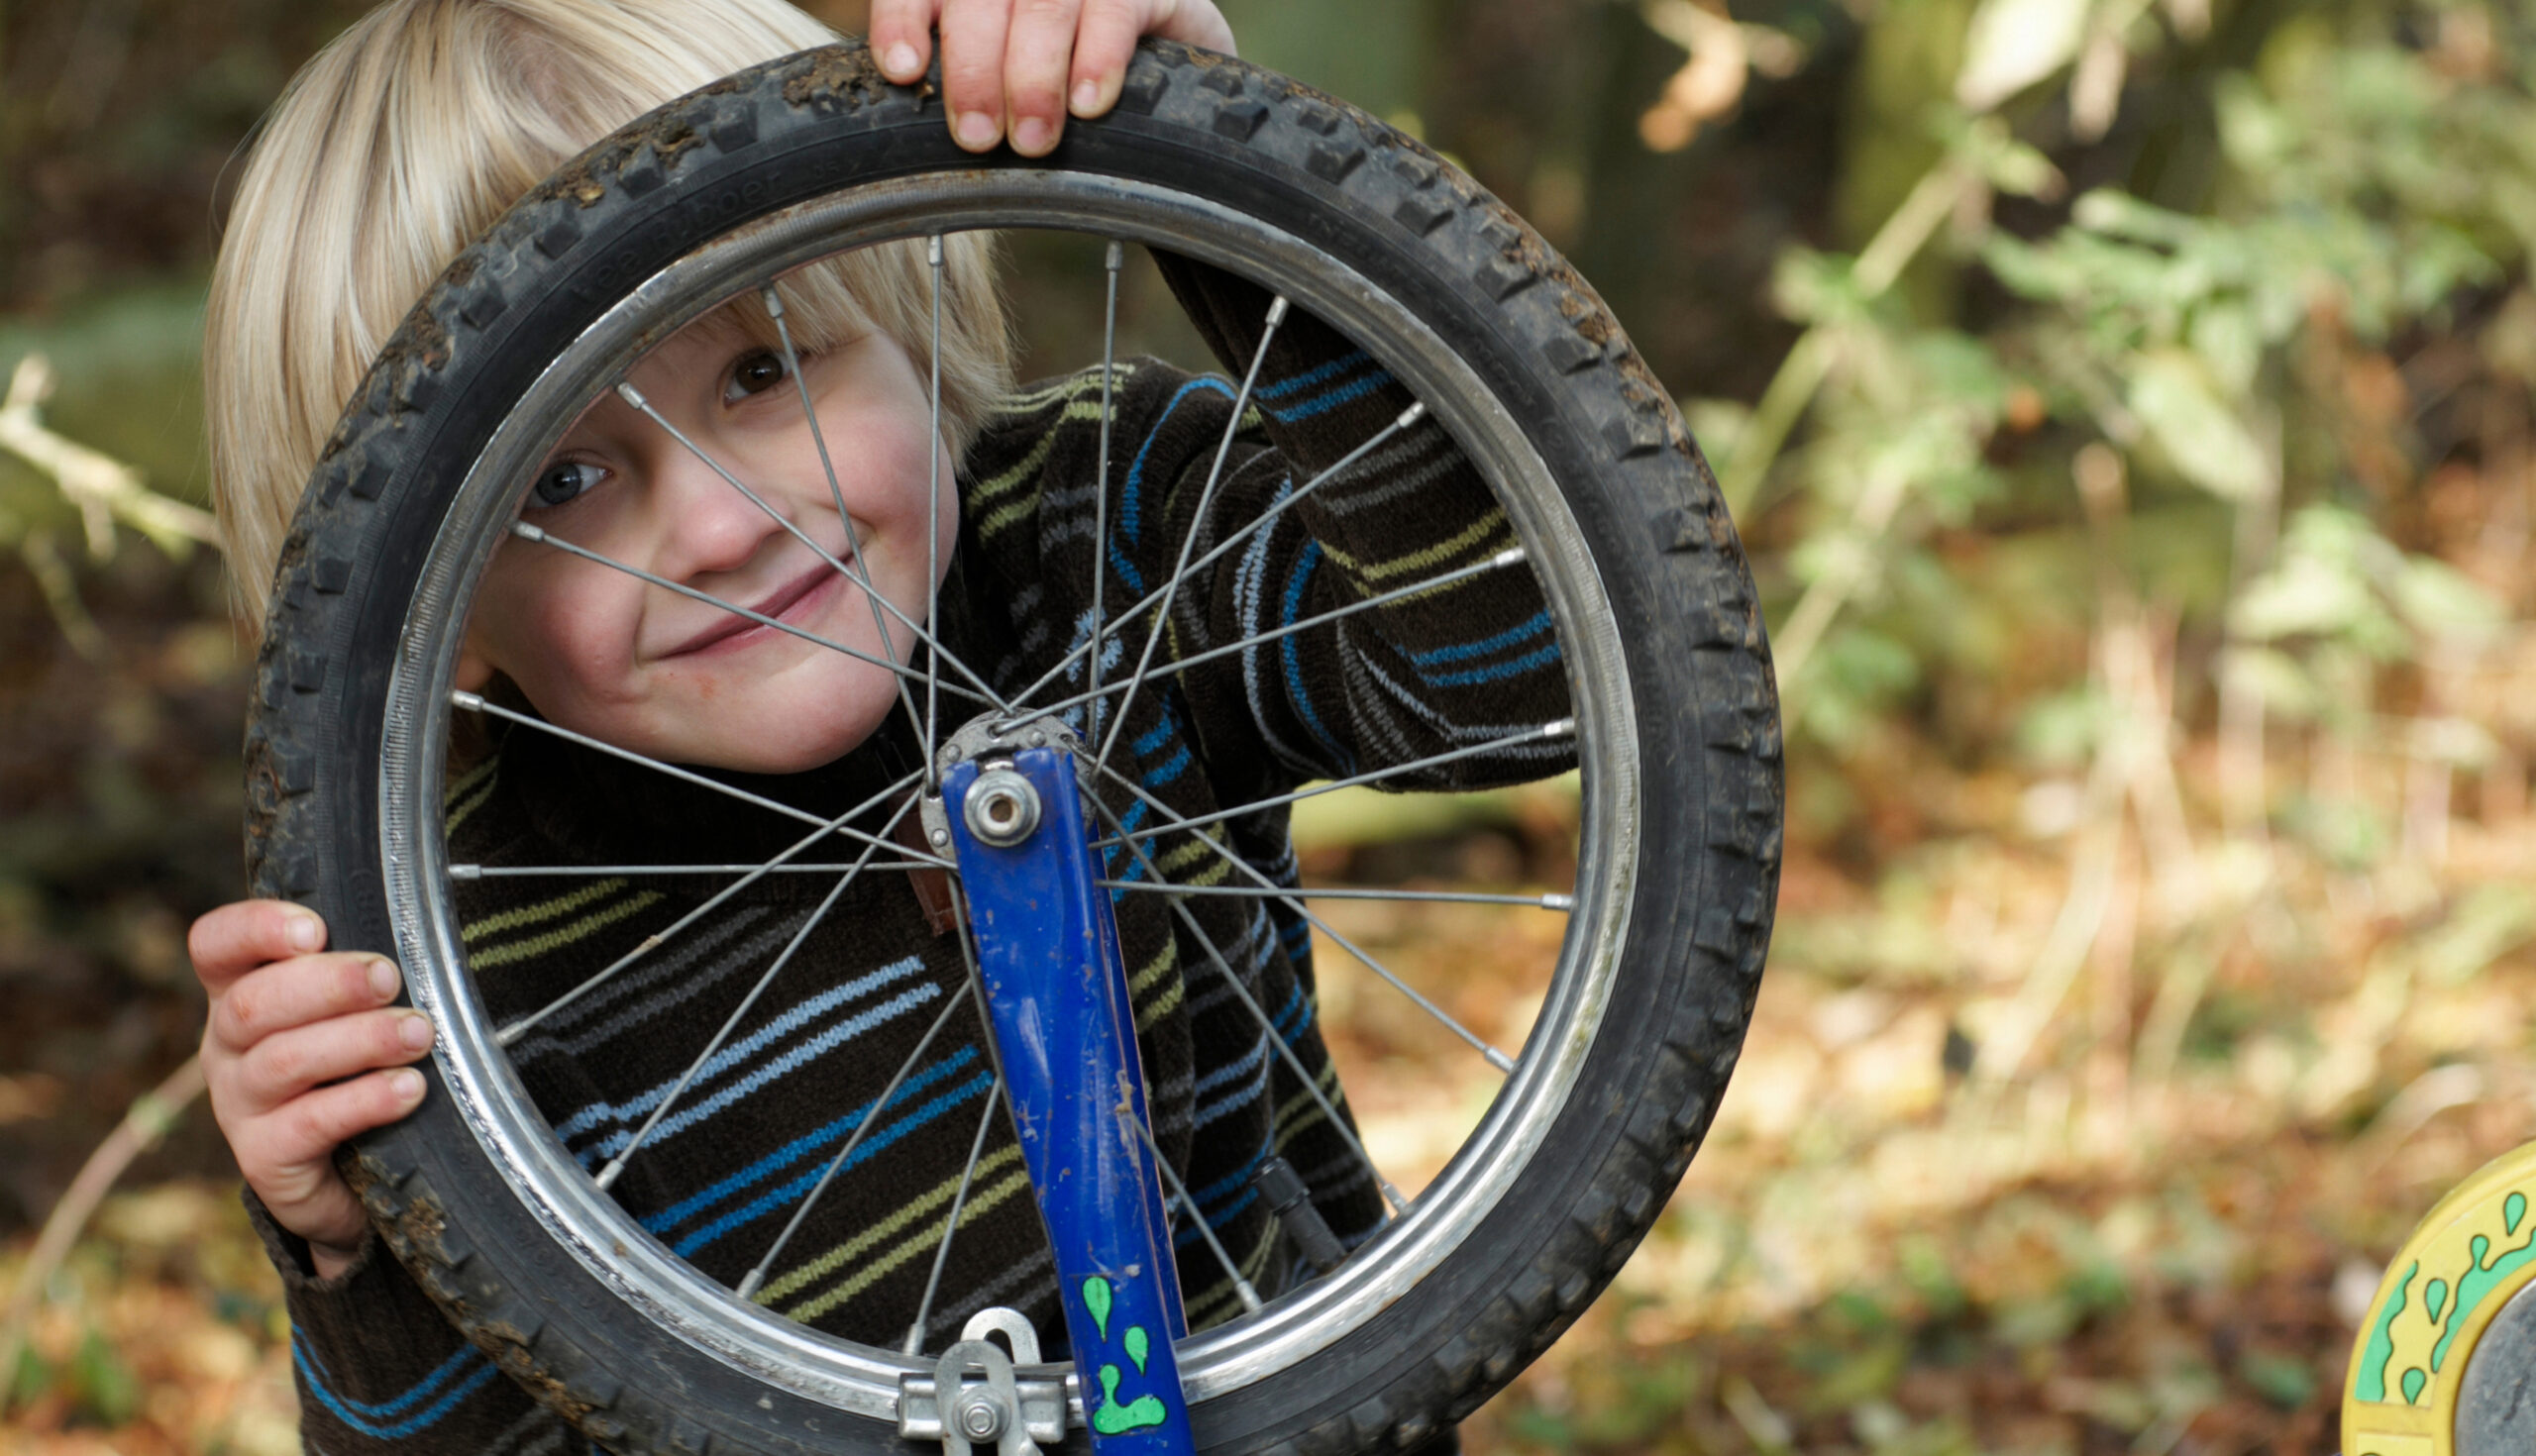 Boy looking through bike wheel